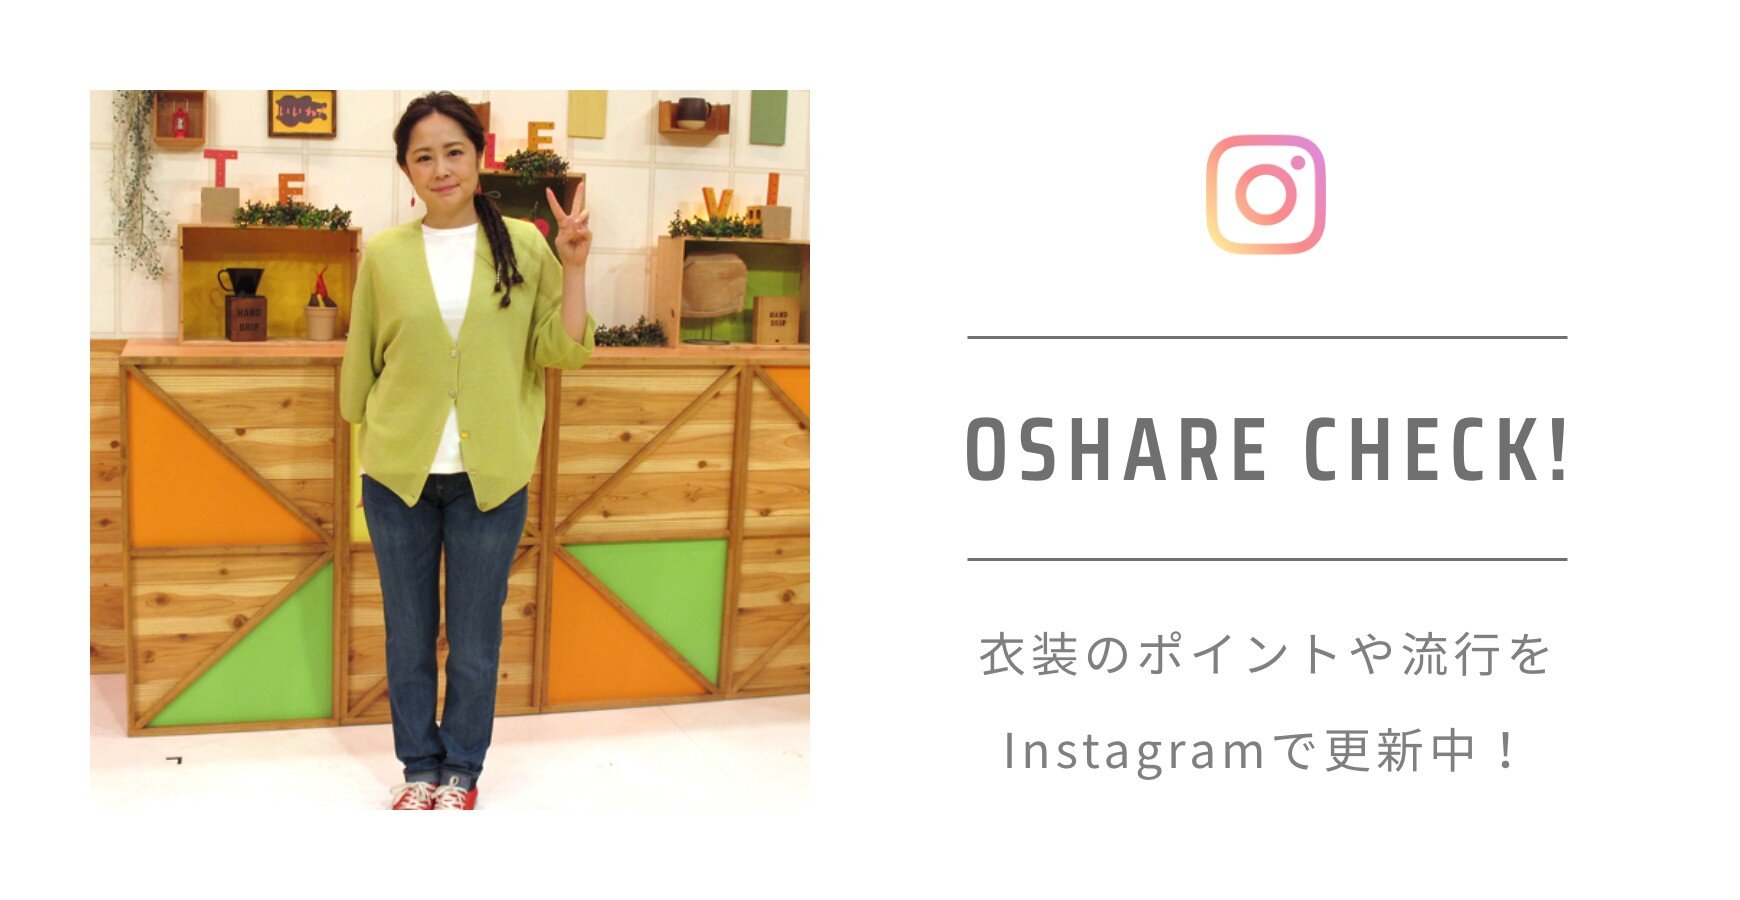 OSHARE CHECK! 衣装のポイントや流行をInstagramで更新中！